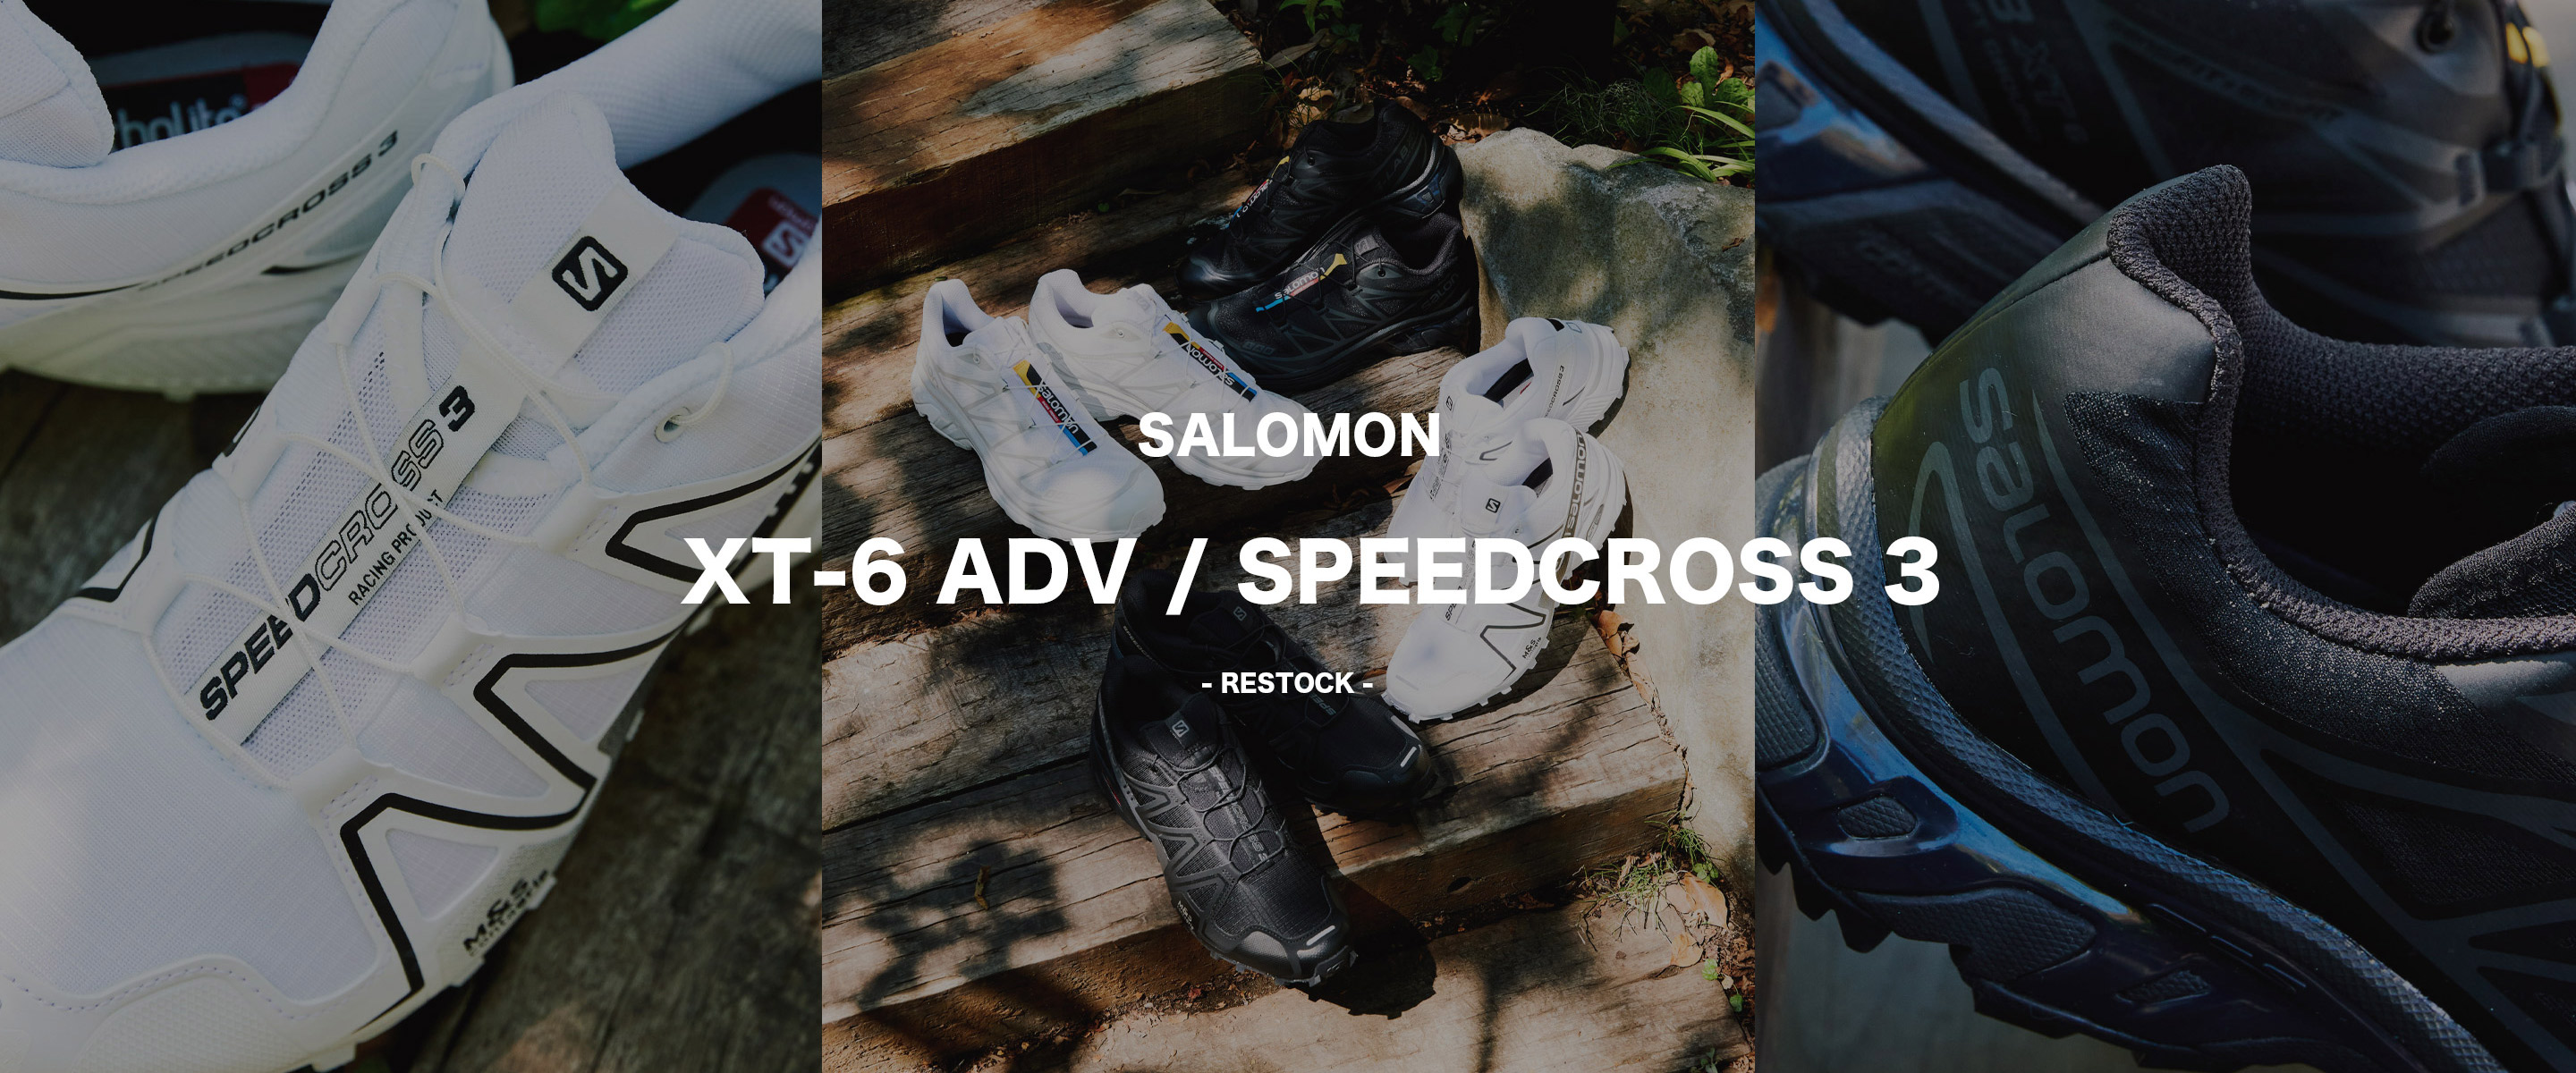 SALOMON XT-6 ADV / SPEEDCROSS 3